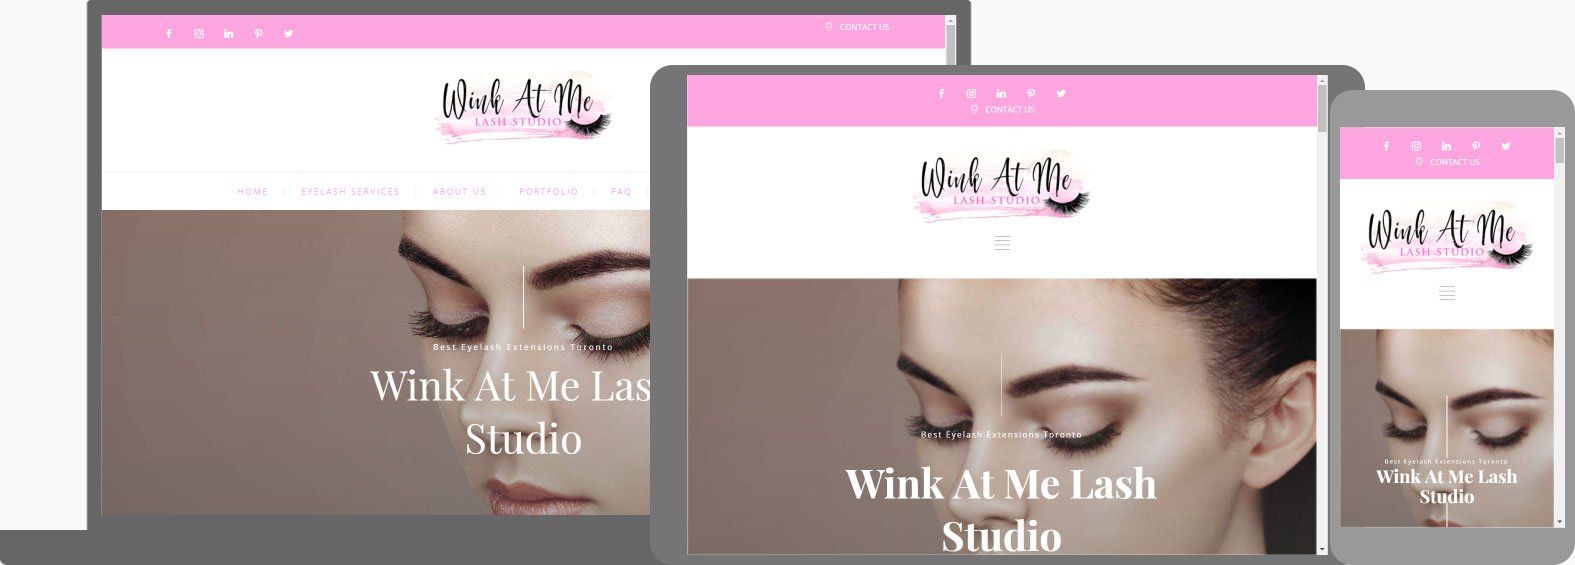 Beauty Salon Website Design - Wink At Me Lash Studio